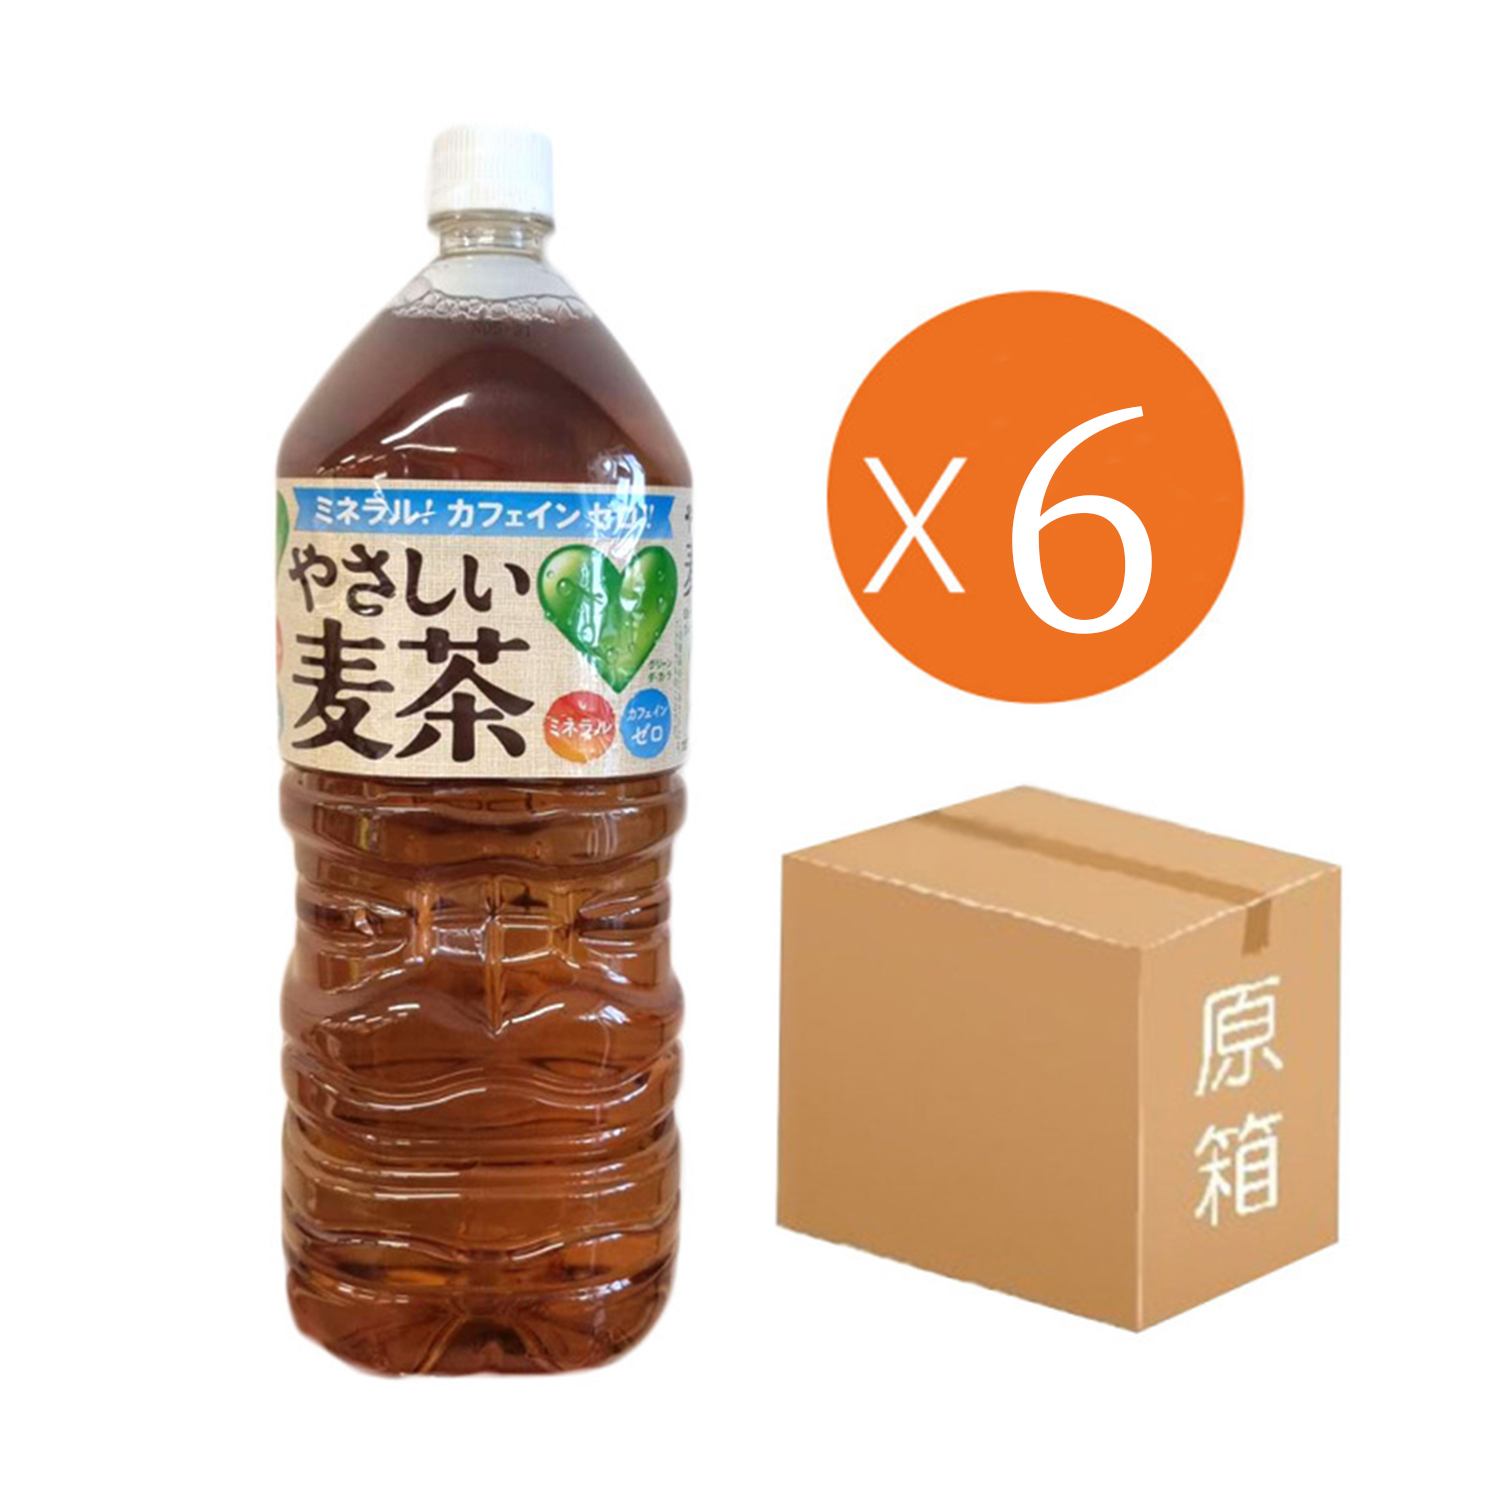 Suntory DaKaRa Barley Tea 0 Sugar 2L*6-eBest-Coffee & Tea,Drinks